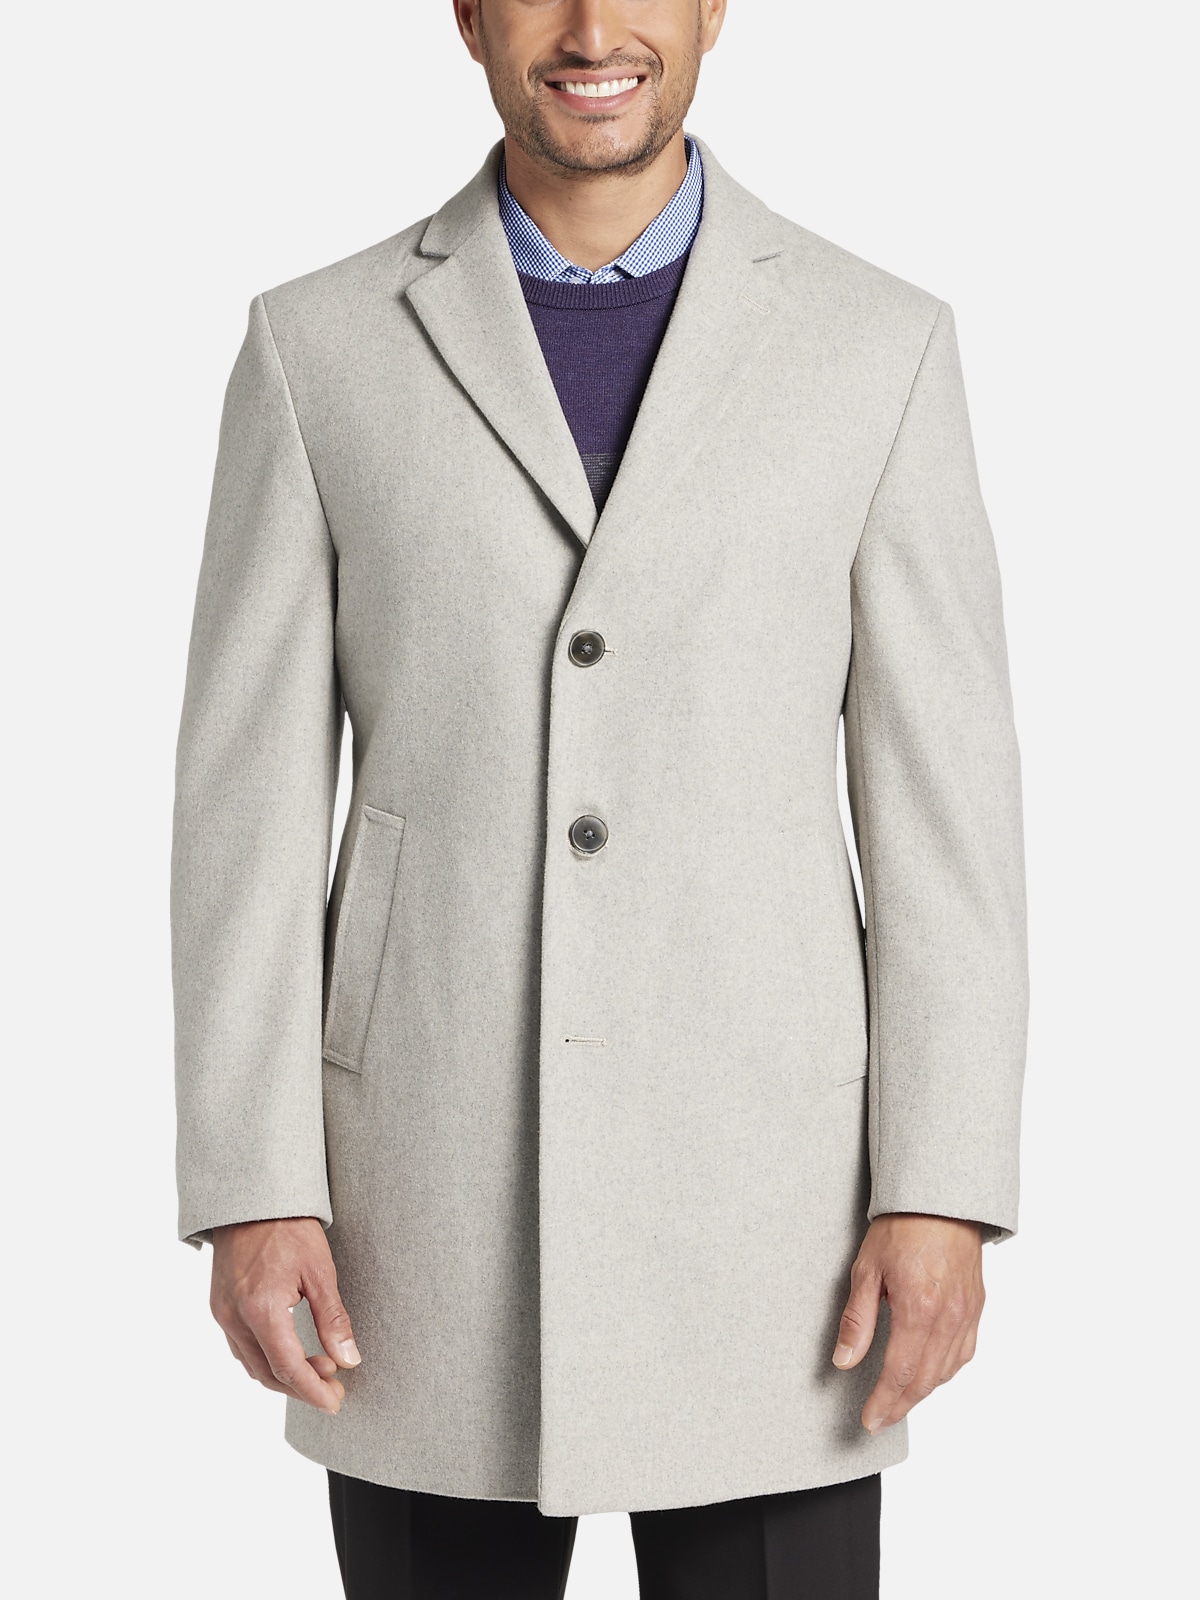 Calvin Klein Modern Fit Topcoat | All Clearance $39.99| Men's Wearhouse